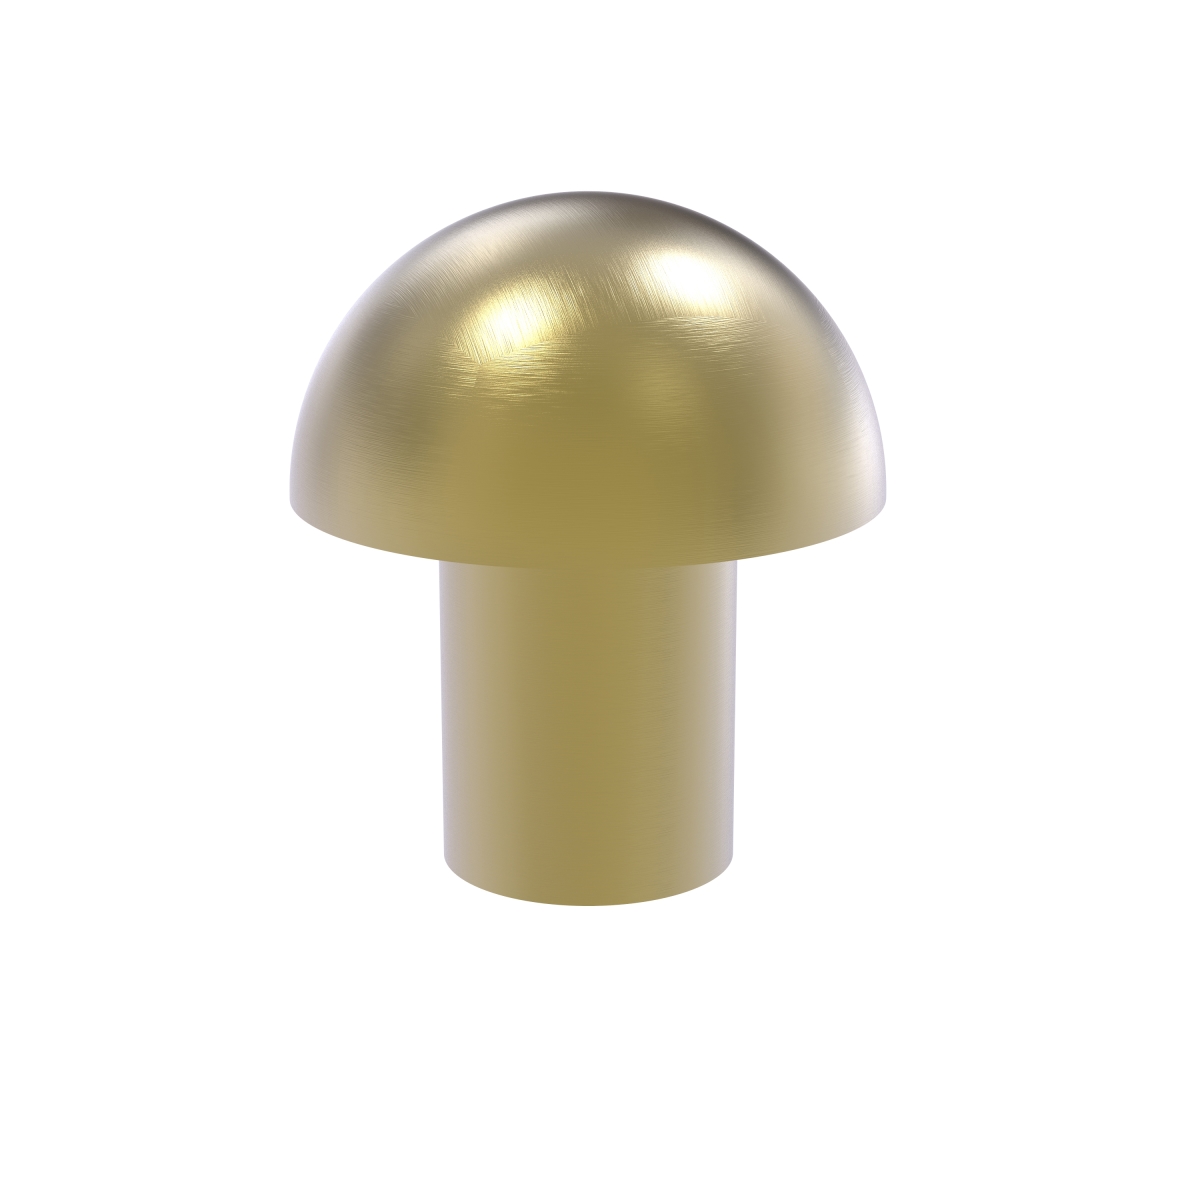 106-sbr 1 In. Round Mushroom Cabinet Knob, Satin Brass